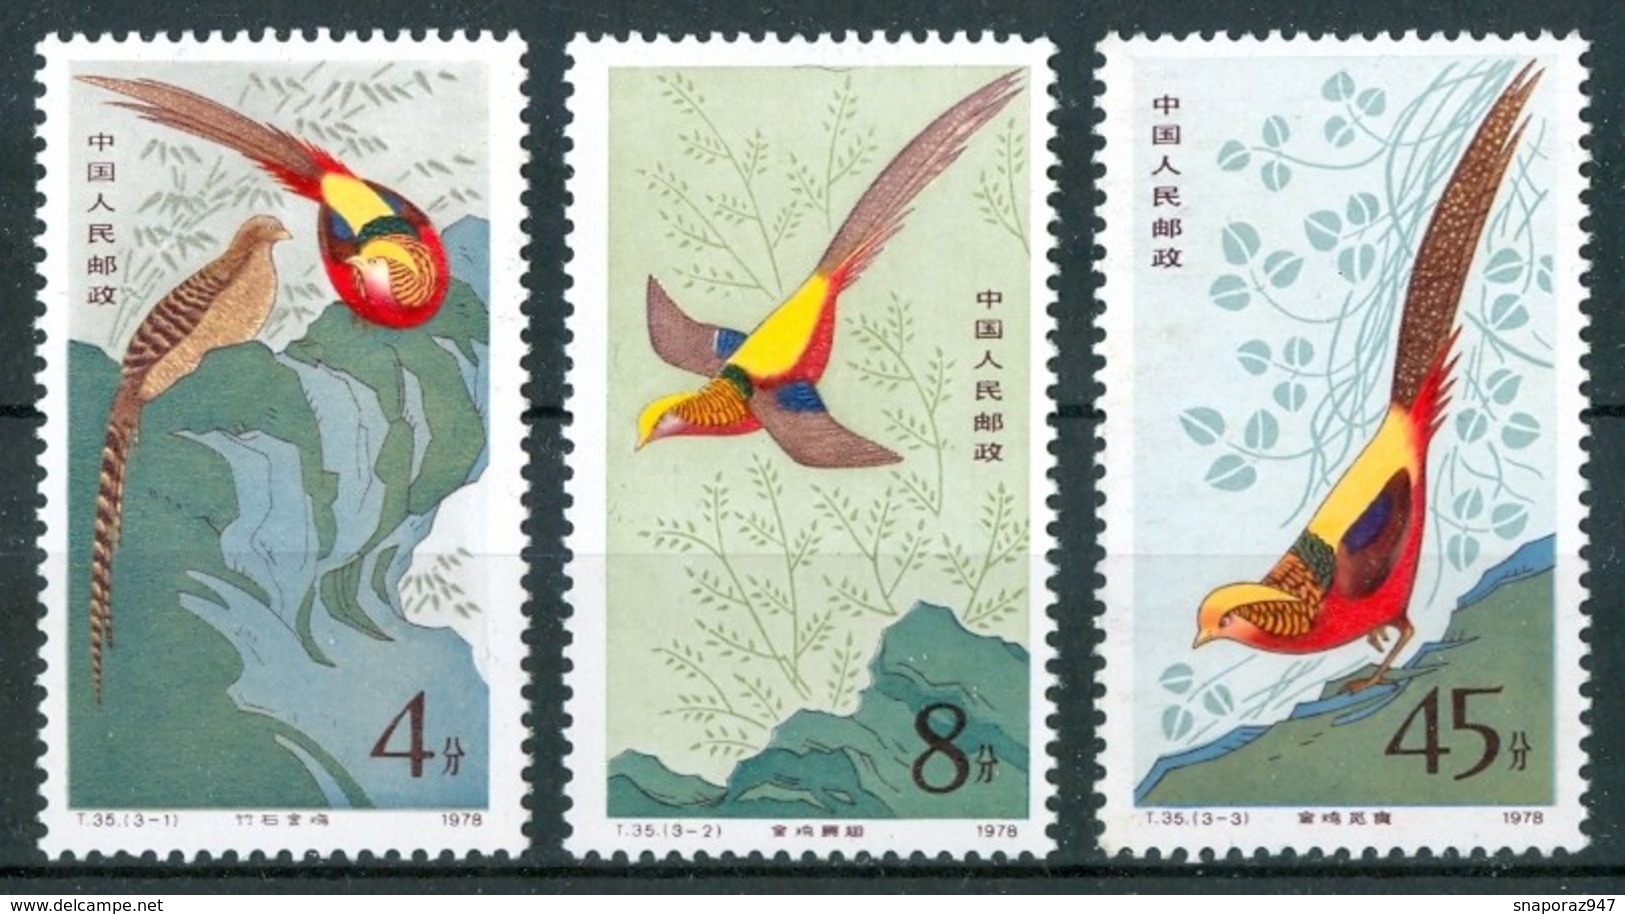 1979 Cina China Uccelli Birds Oiseux Set MNH** - Nuovi